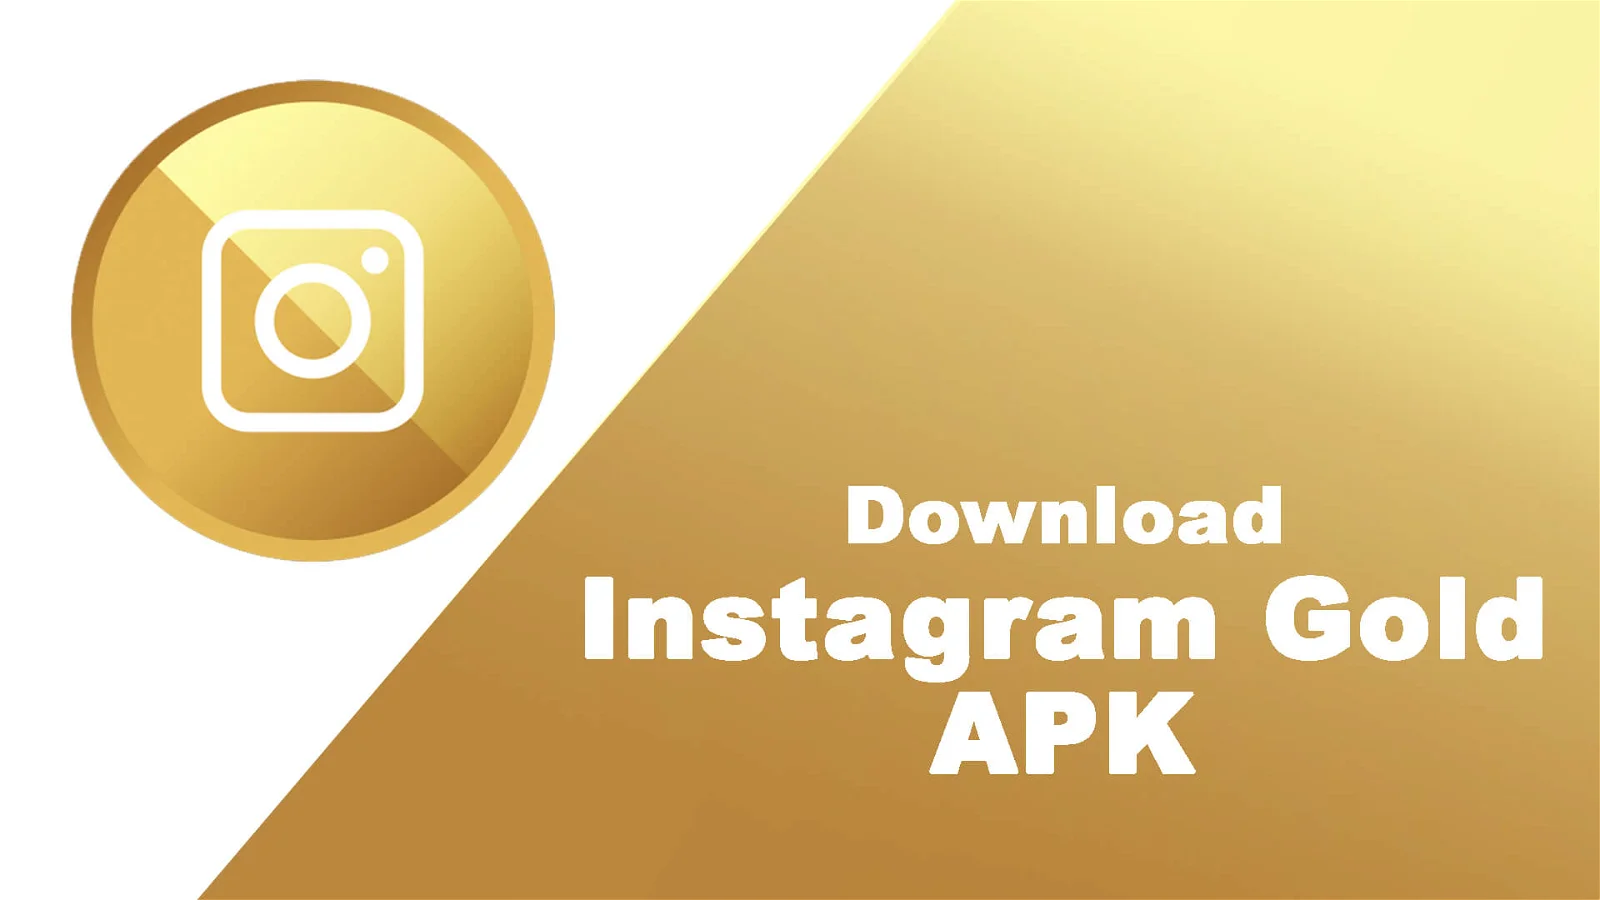 Instagram Gold APK v7.0 Official Download For Android Latest Version